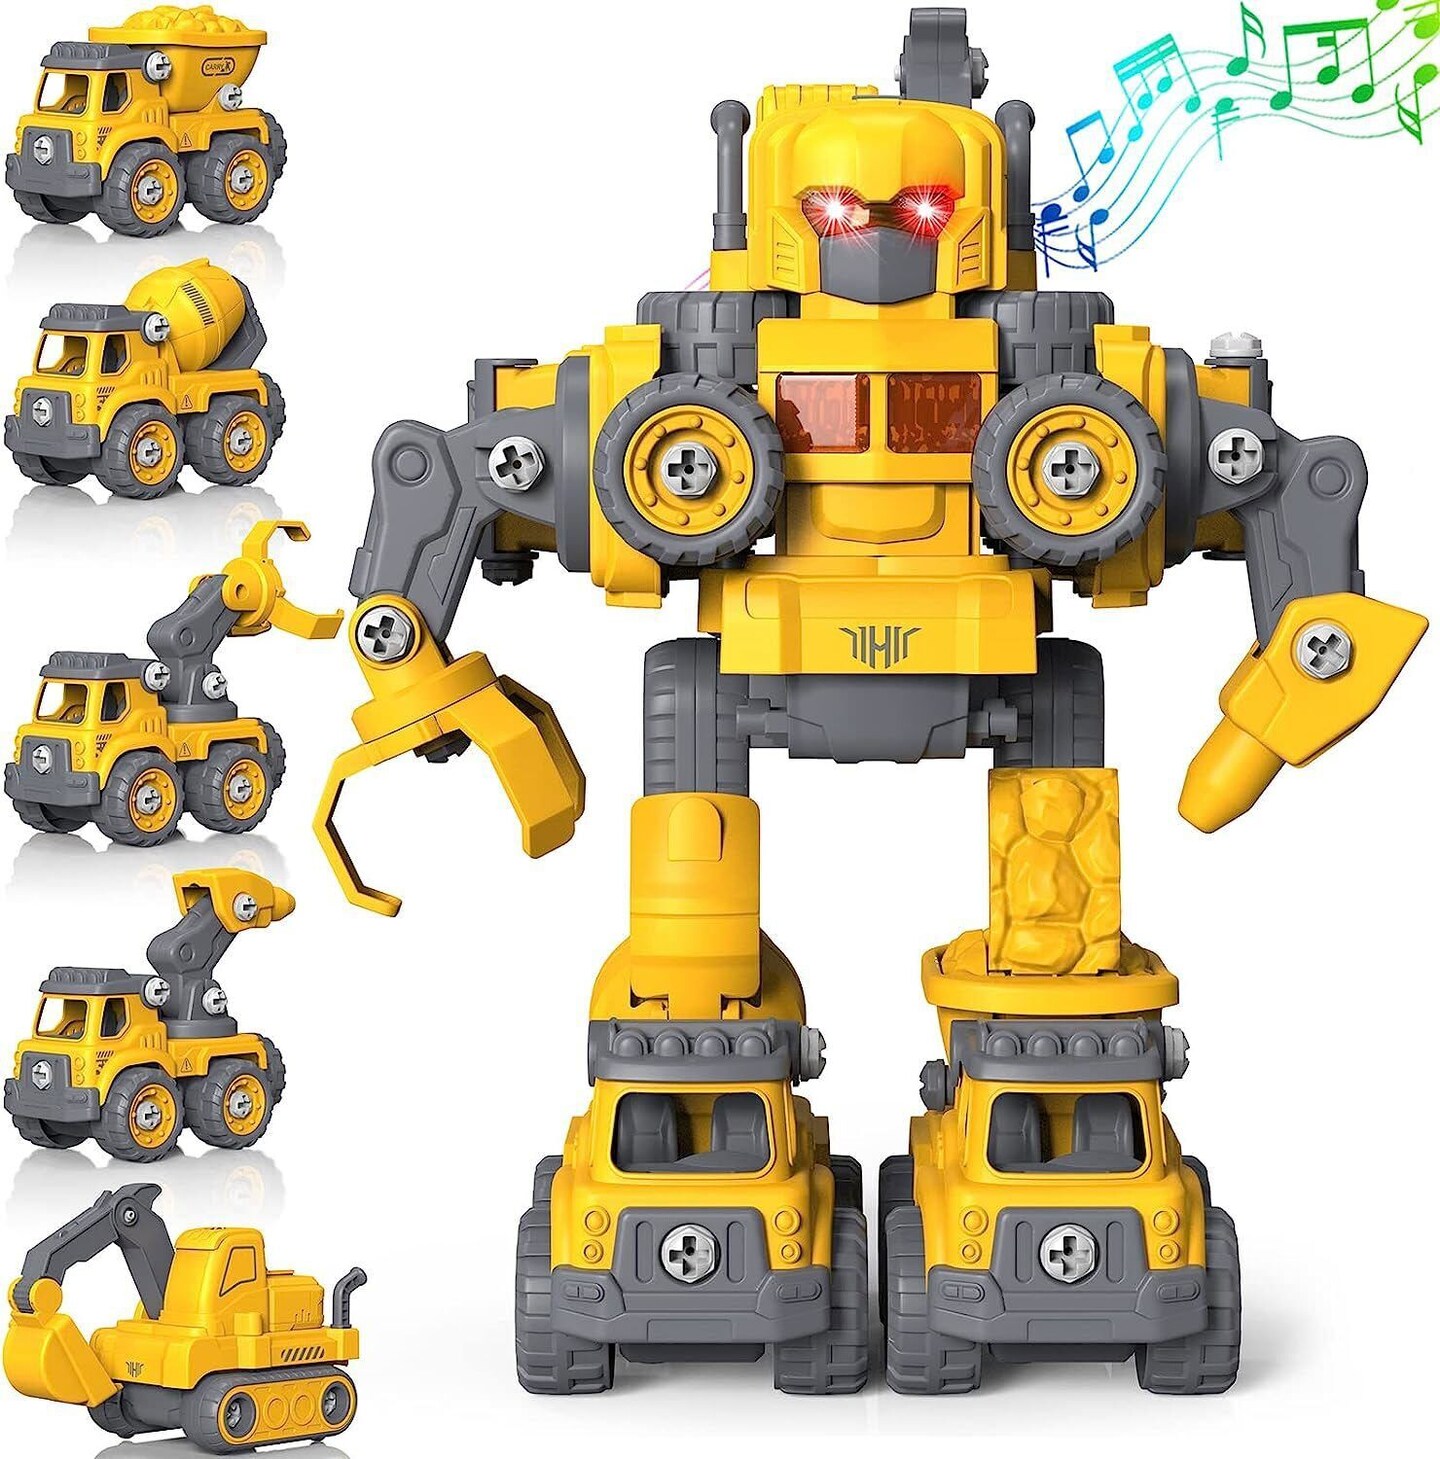 Kitcheniva Take Apart Robot Toys Vehicle Set 5 in 1 STEM Toys